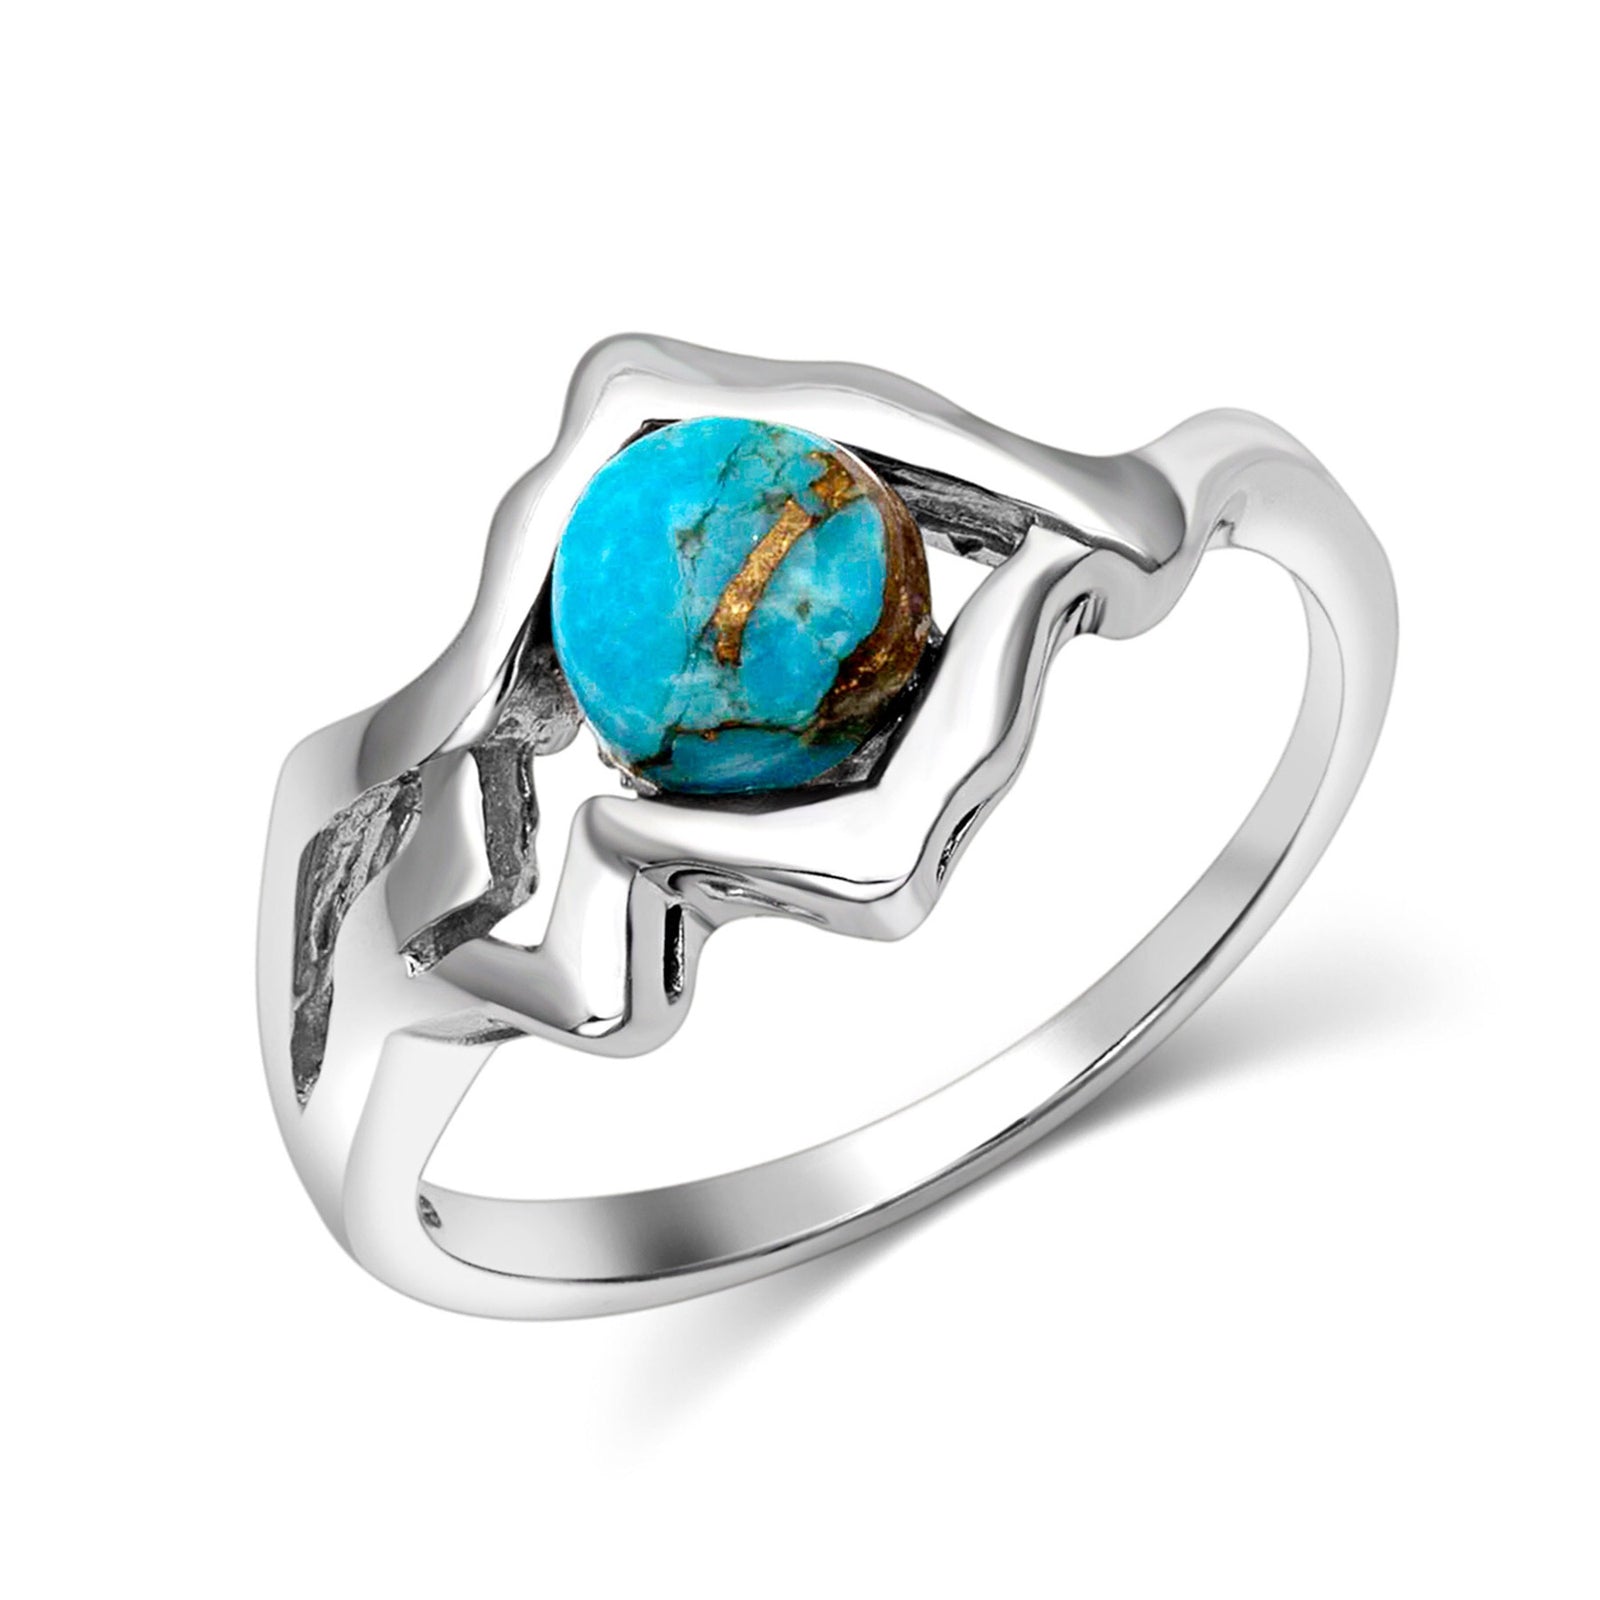 Pursue the Wild Mountain Turquoise Ring